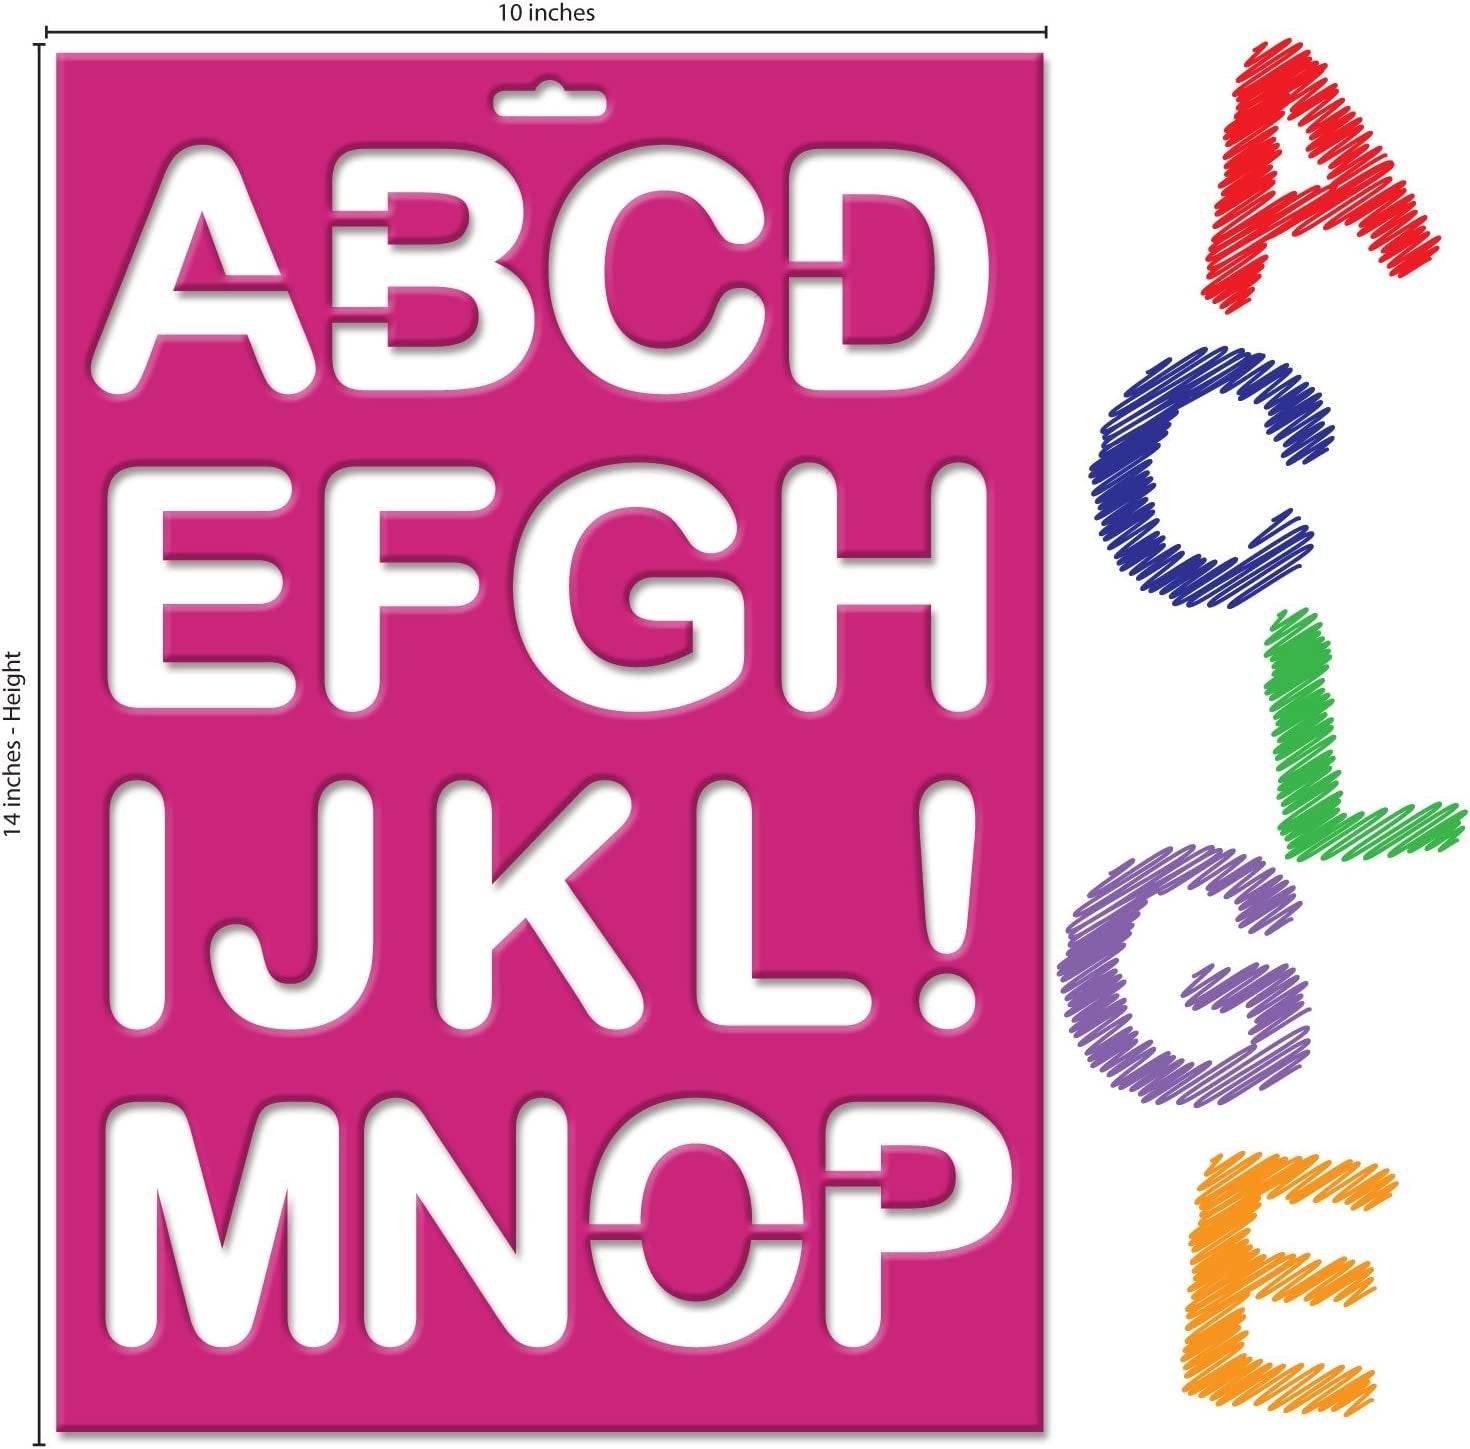 Karty Letter Stencils - Large Size Alphabet, Numeric, and Symbols - Reusable Plastic Kit